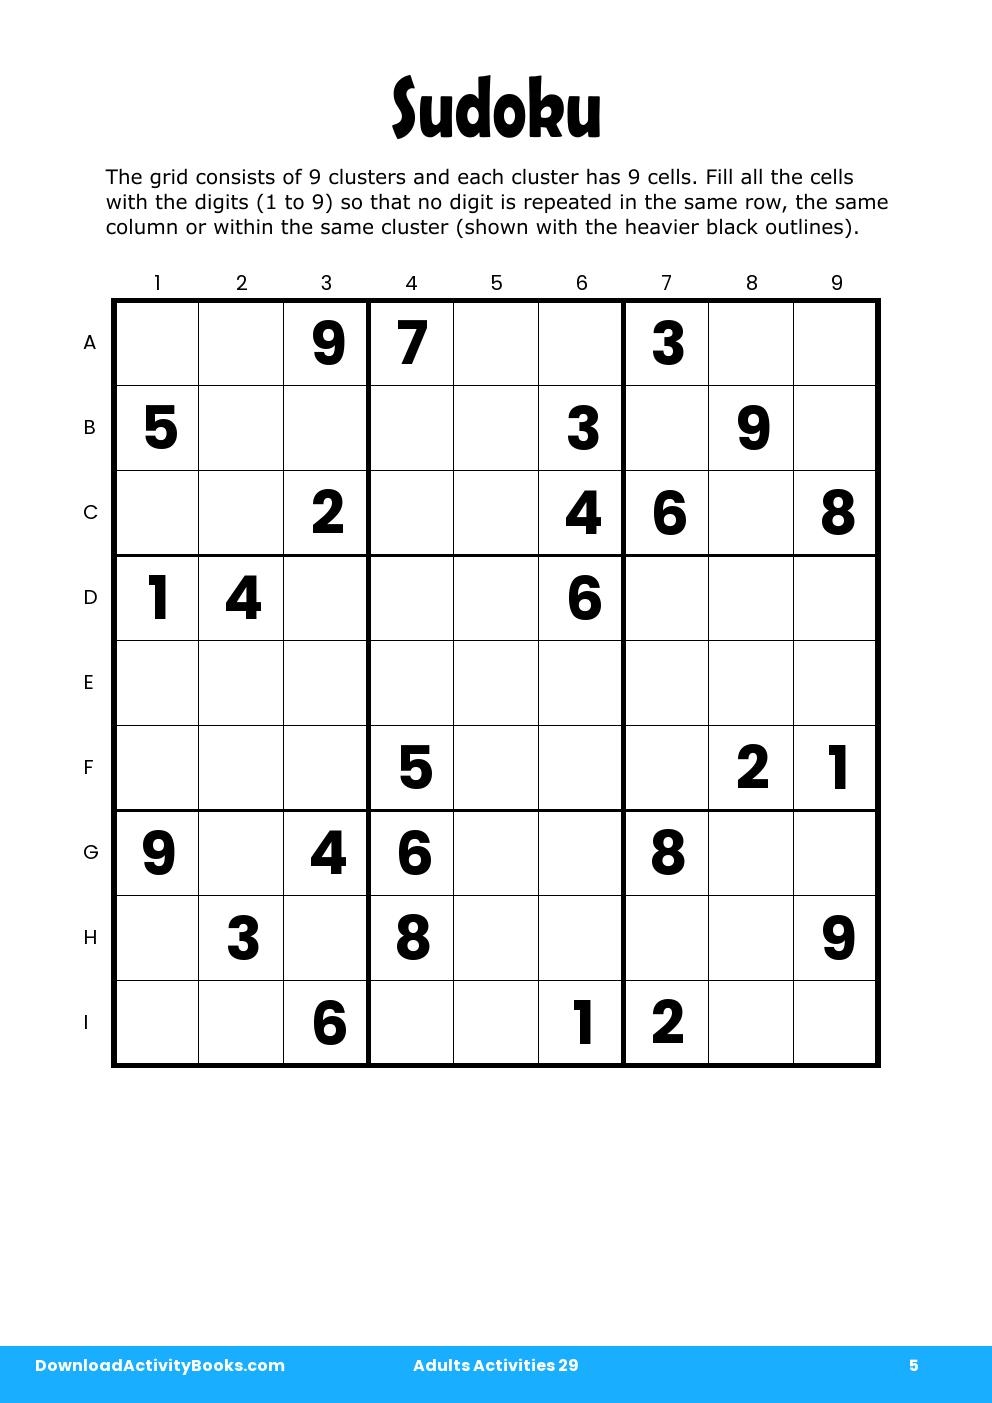 Sudoku in Adults Activities 29